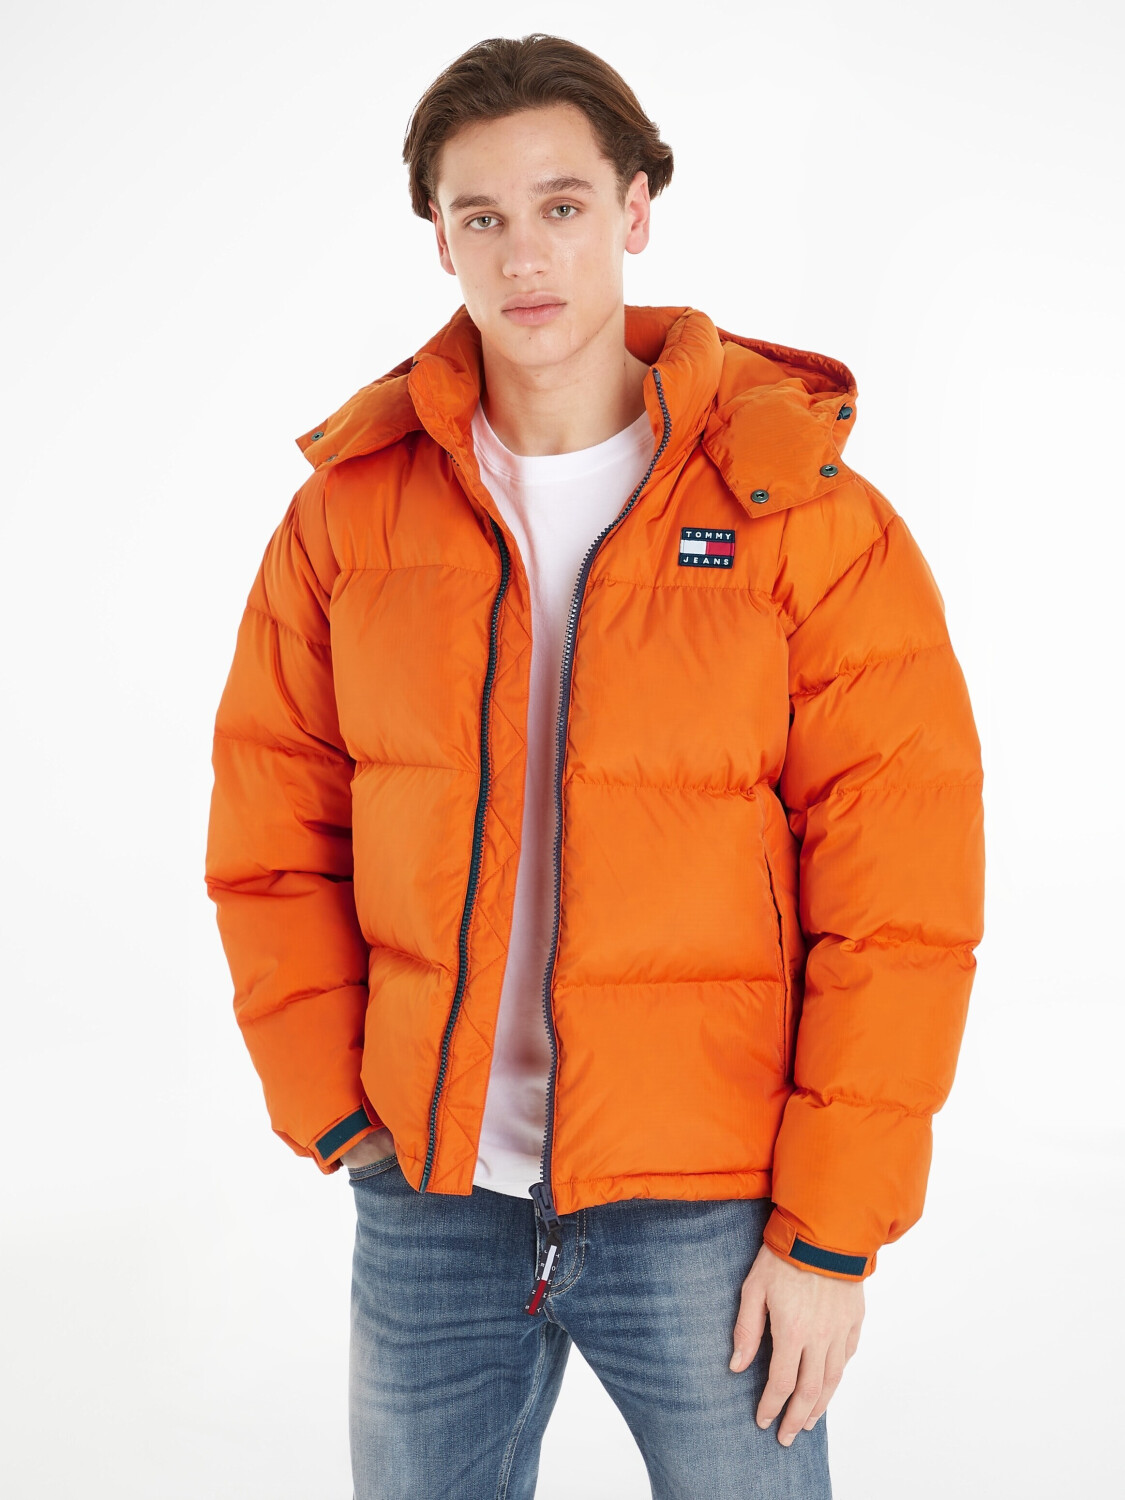 Tommy Hilfiger Puffer orange Alaska Hood bonfire Preisvergleich (DM0DM15445) Jacket ab | Removable € 124,89 bei